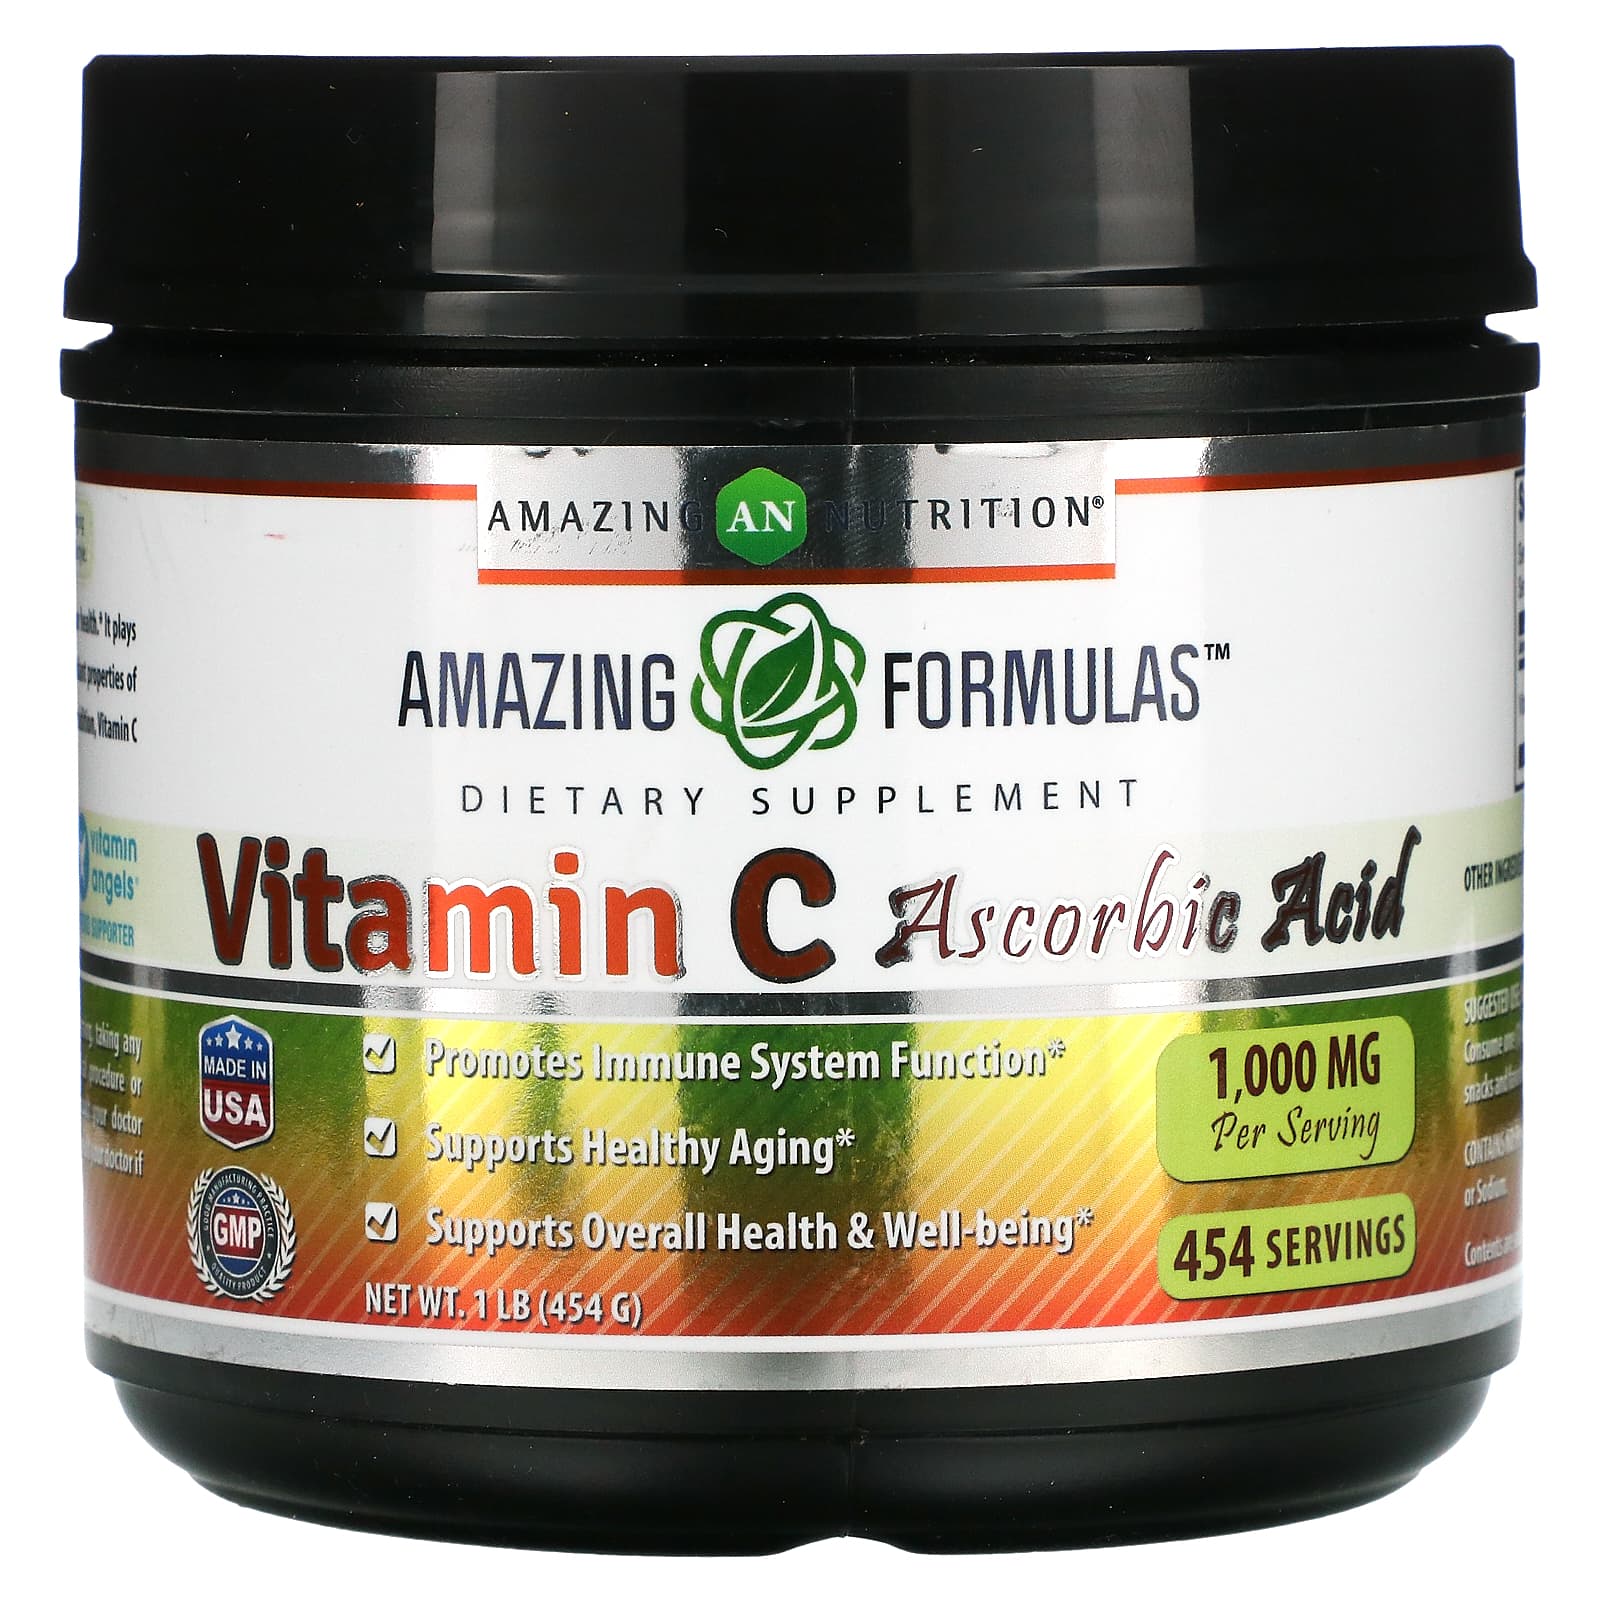 Витамин C Amazing Nutrition аскорбиновая кислота, 454 г